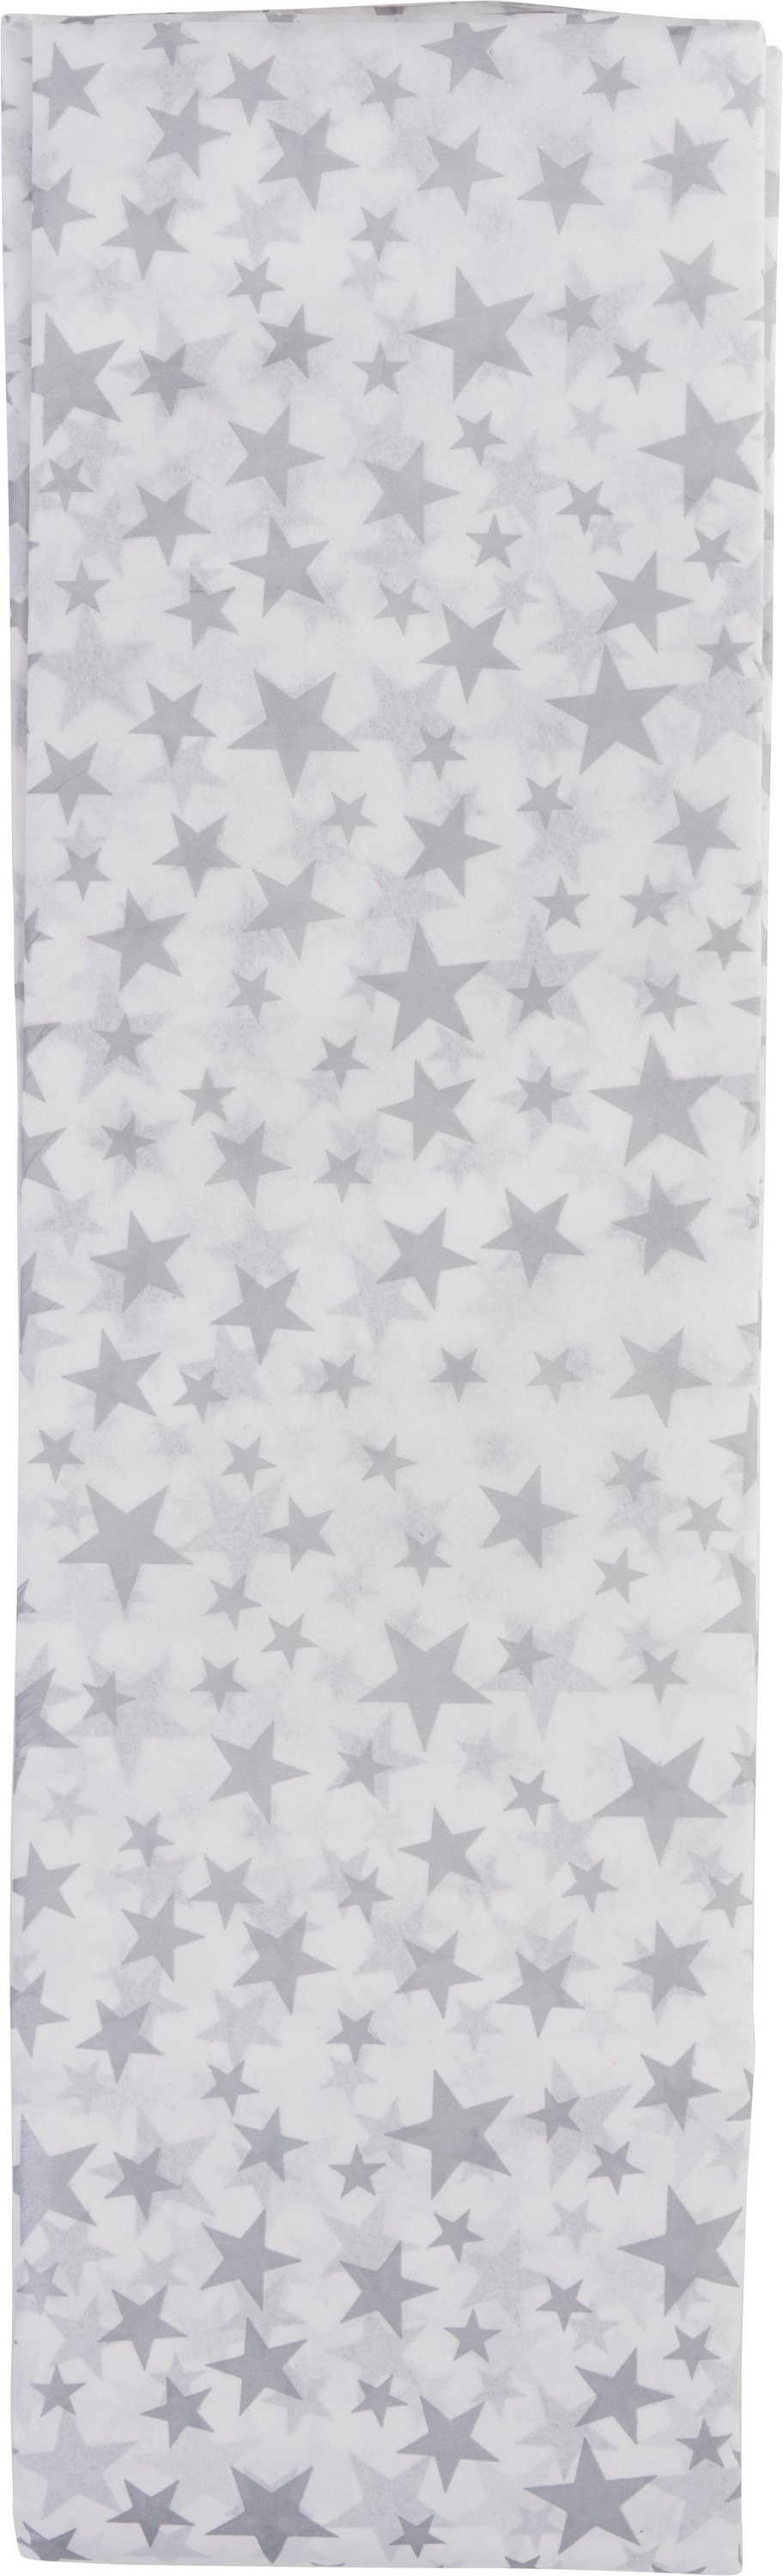 CLAIREFONTAINE Seidenpapier Sterne, 4 Bogen Silber | Papier